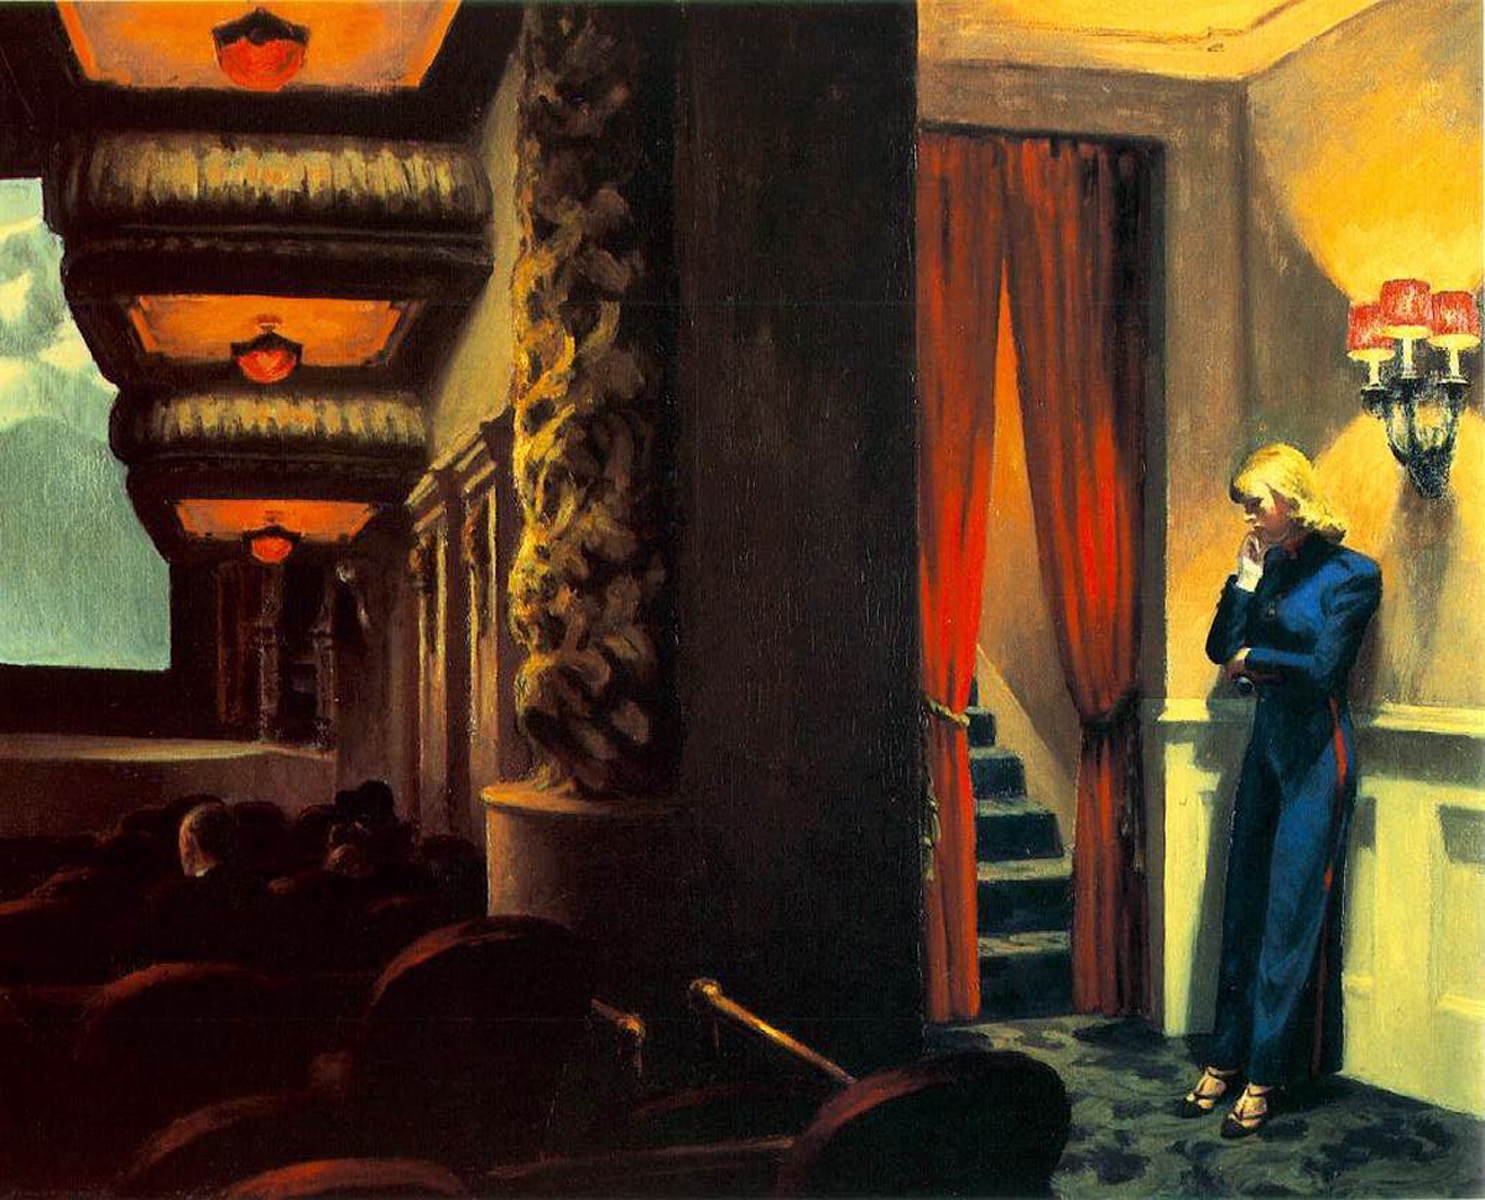 New York Movie by Edward Hopper - 1939 - 81.9 x 101.9 cm Museum of Modern Art